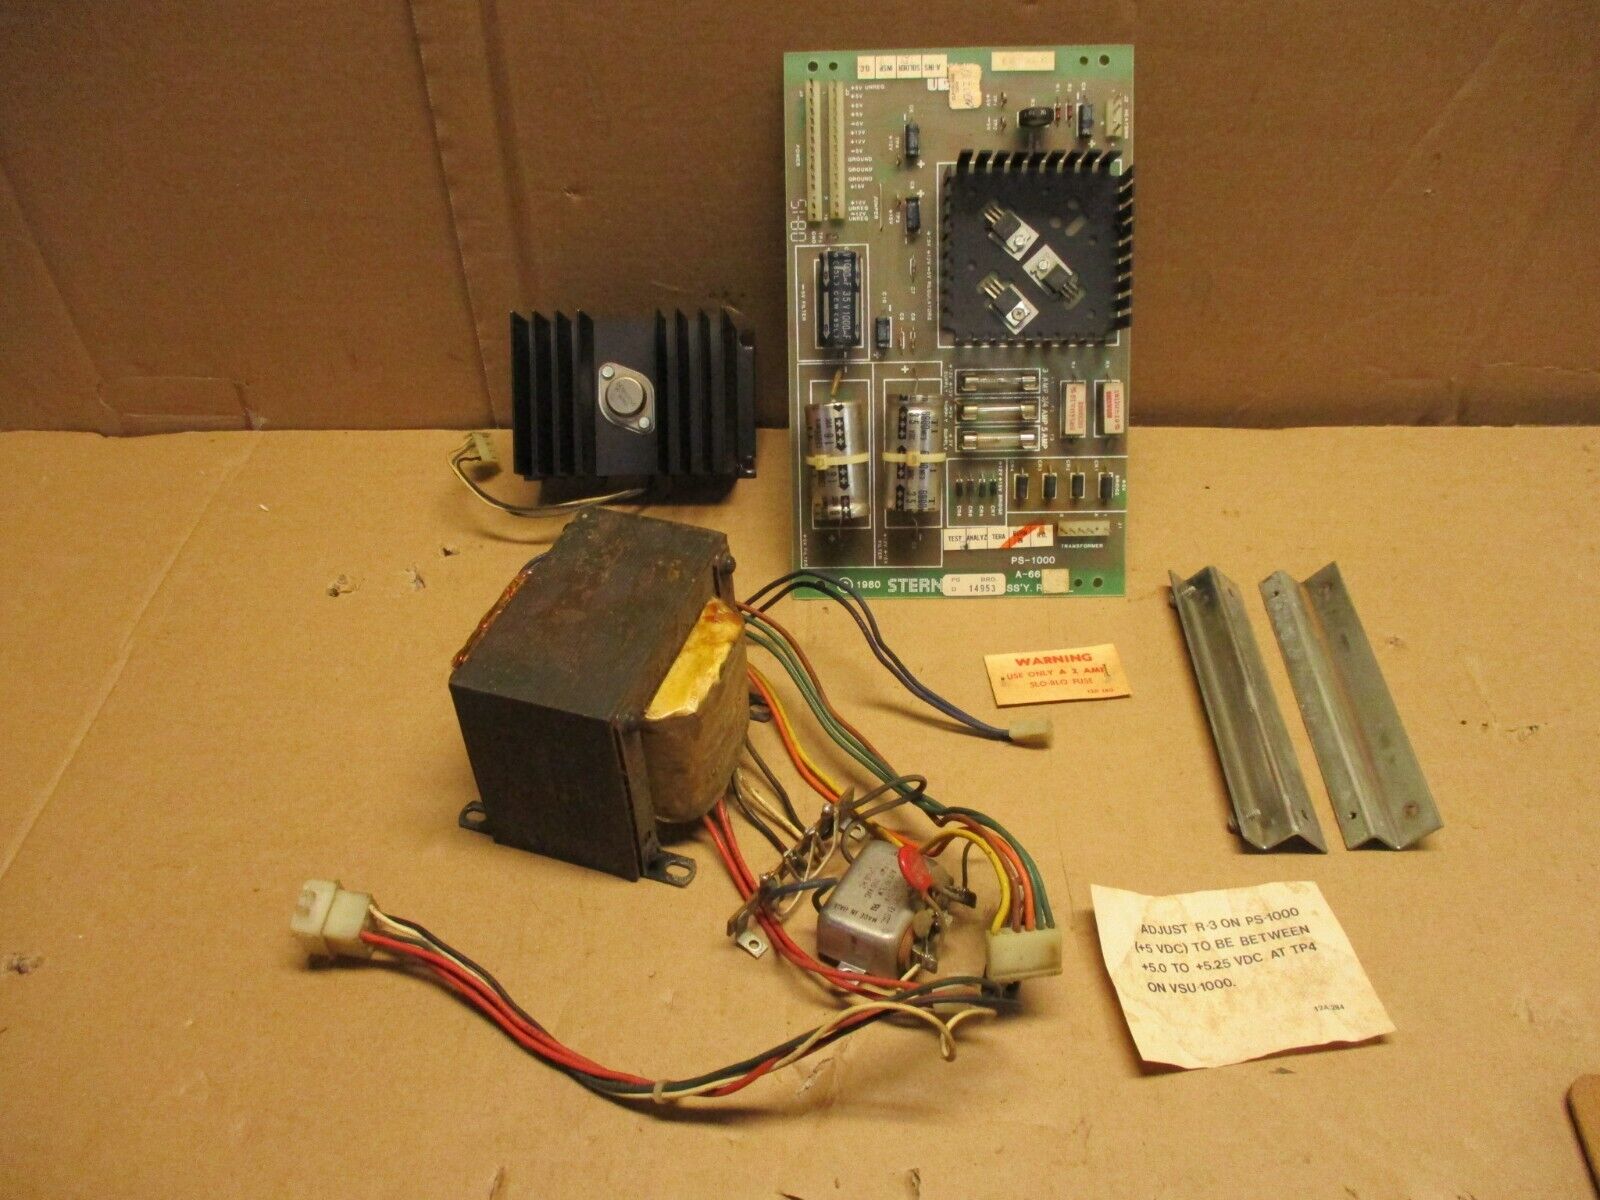 Vintage Stern Berzerk Video Arcade game power supply board and transformer  1980